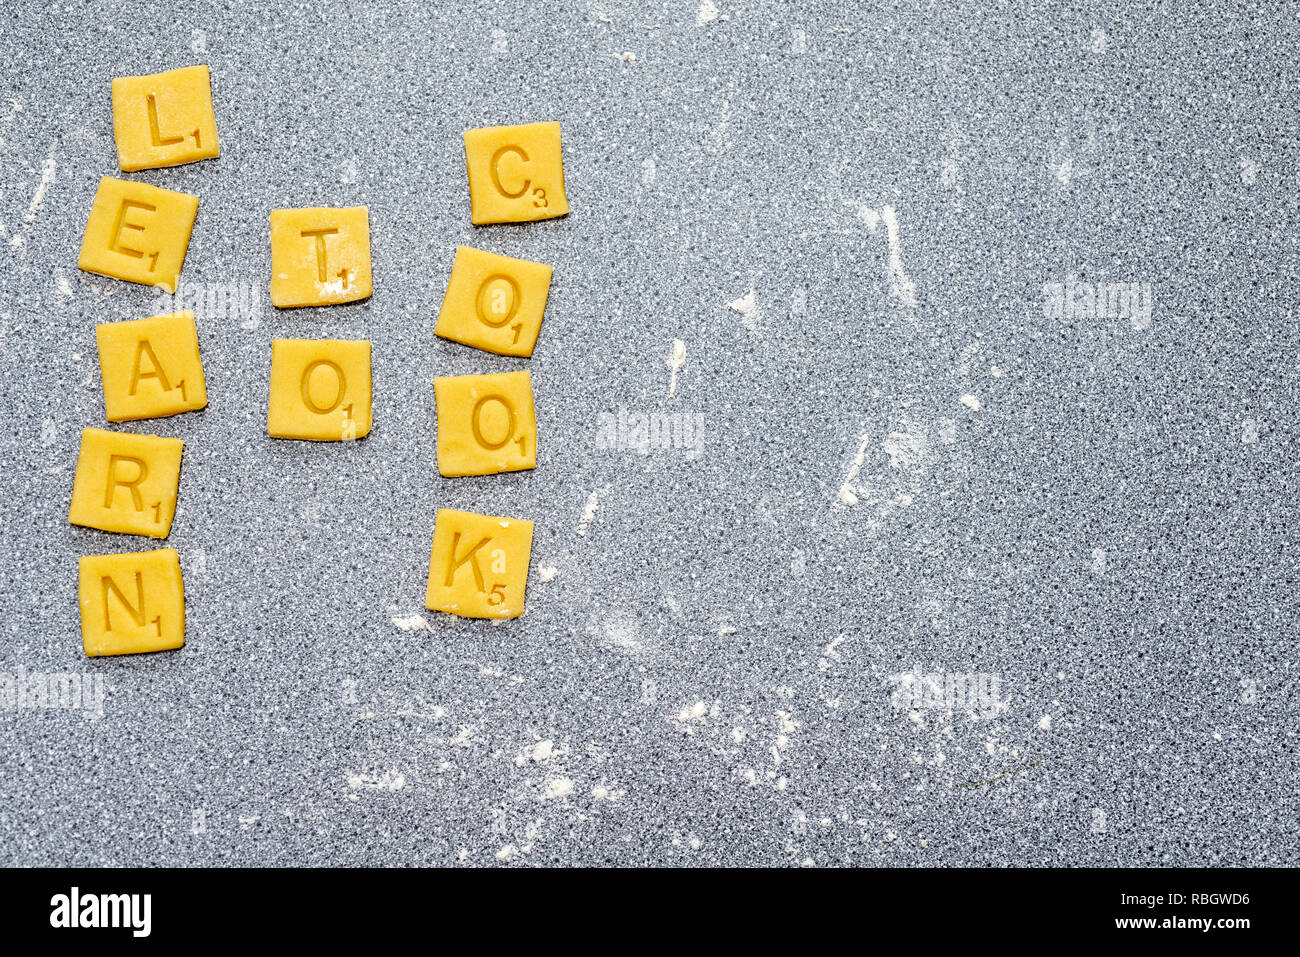 Aprenda a cocinar - scrabble palabras hechas de galleta / masa de galleta. Foto de stock